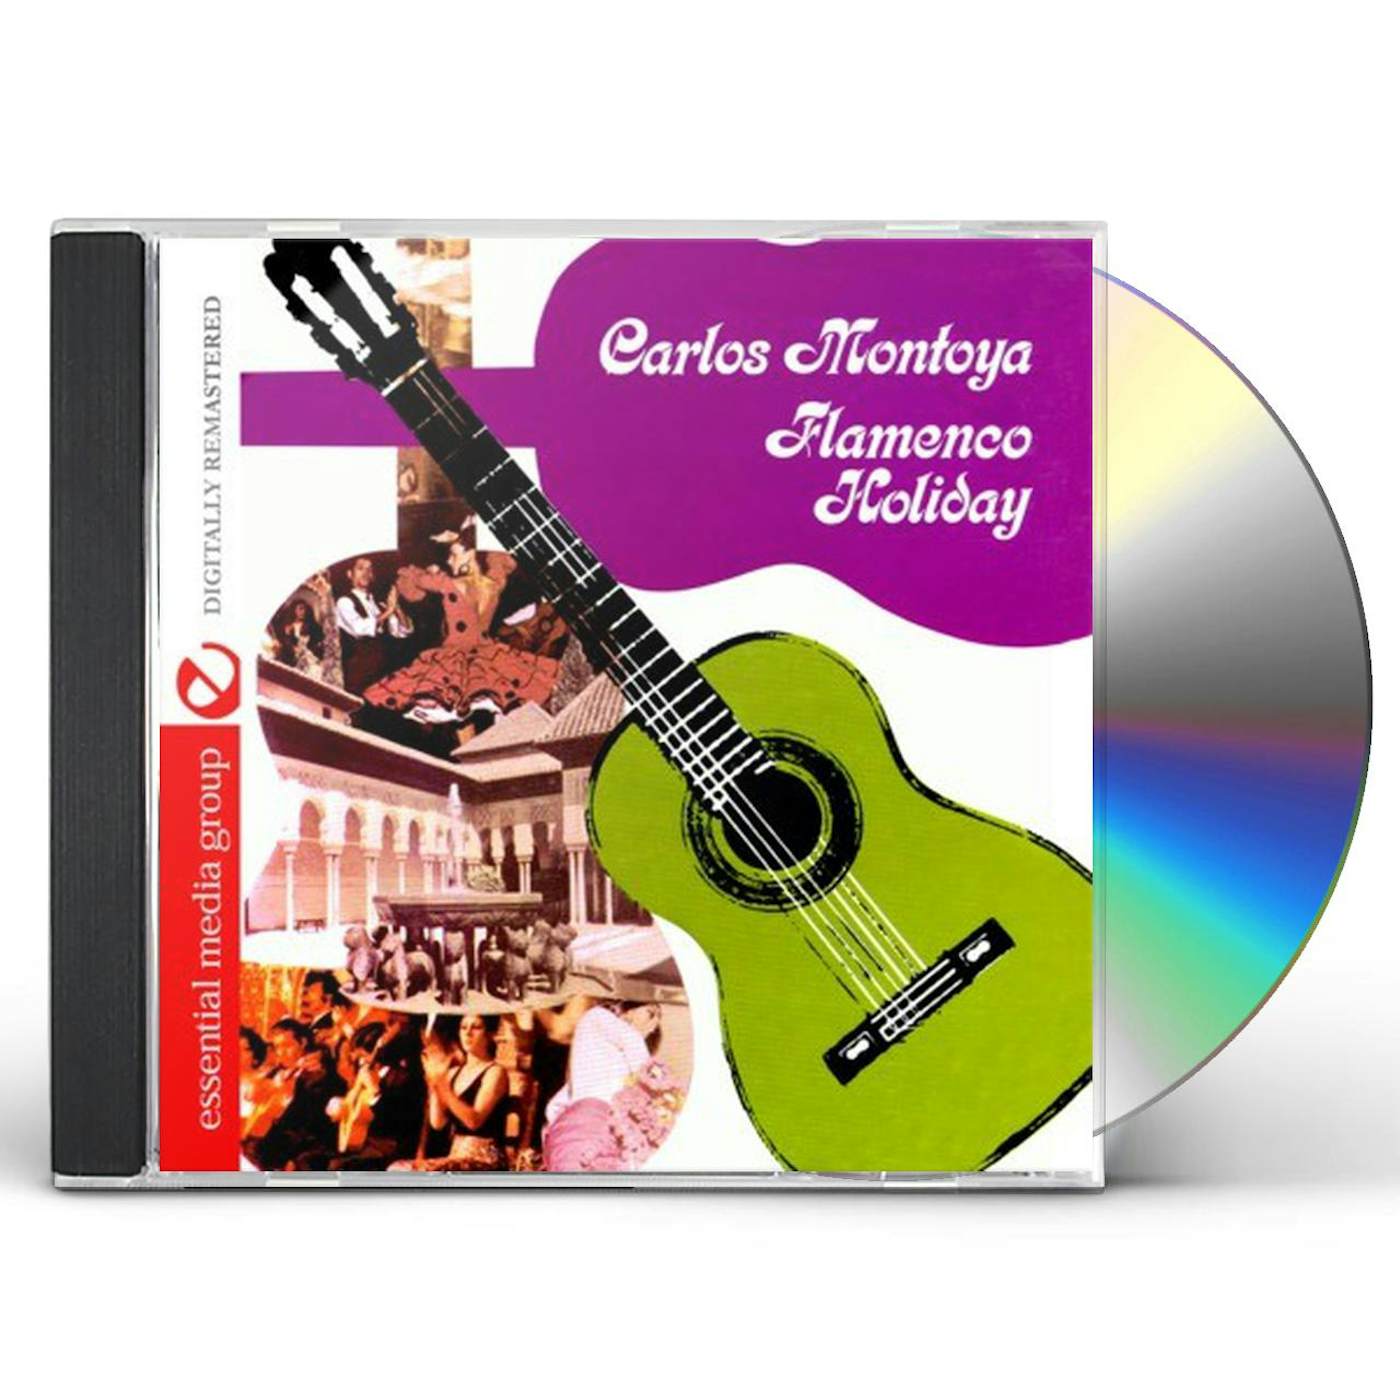 Carlos Montoya FLAMENCO HOLIDAY CD